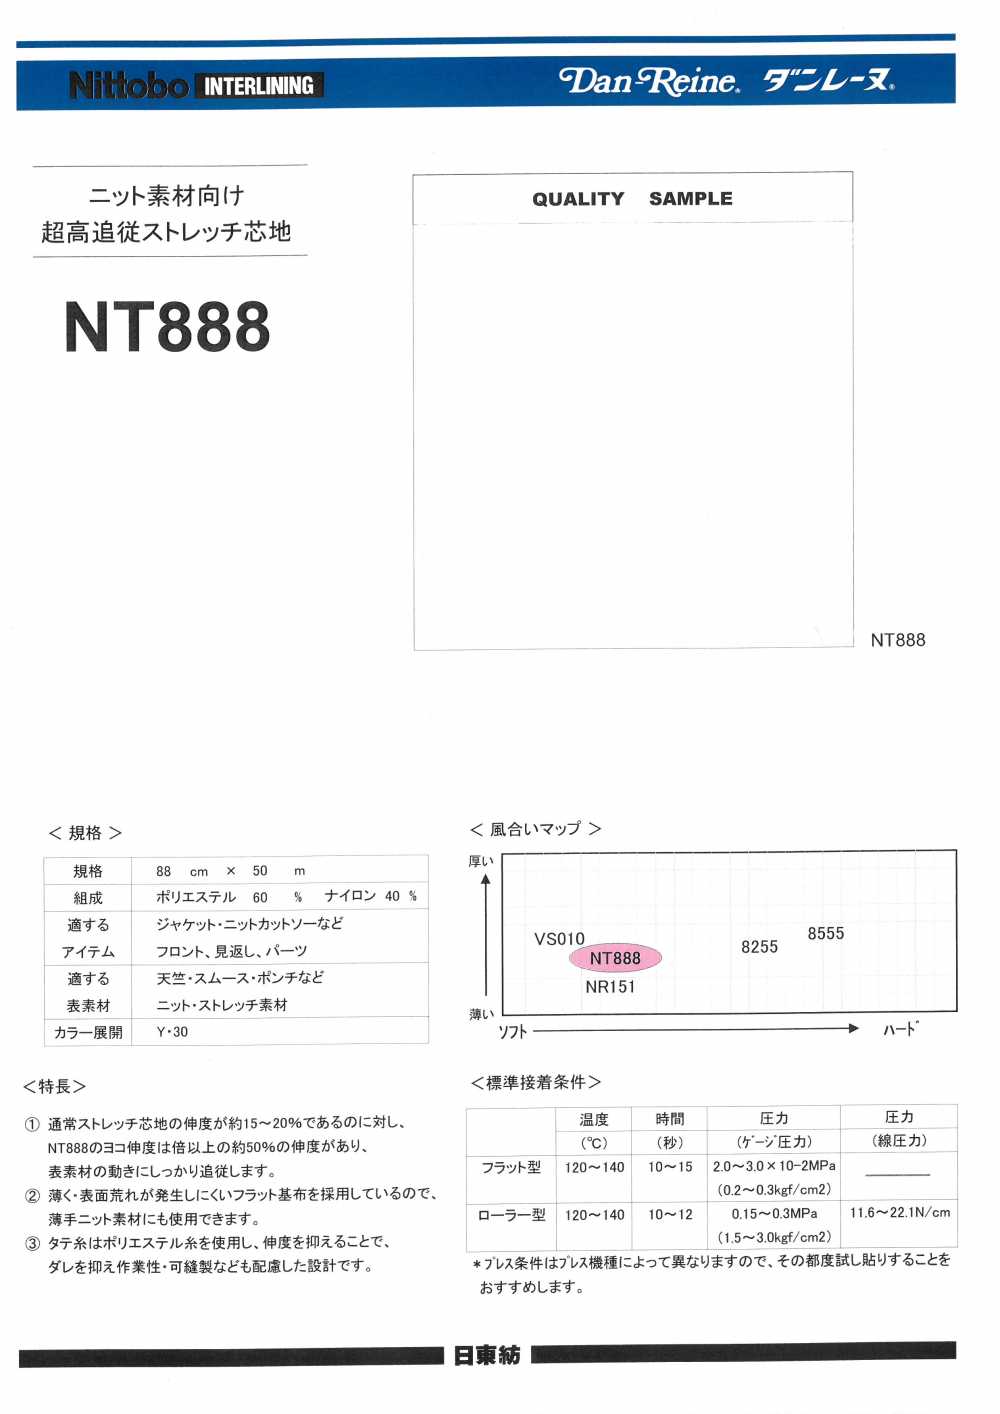 NT888 ダンレーヌ ニット素材向け 超高追従ストレッチ芯地 15D 日東紡インターライニング